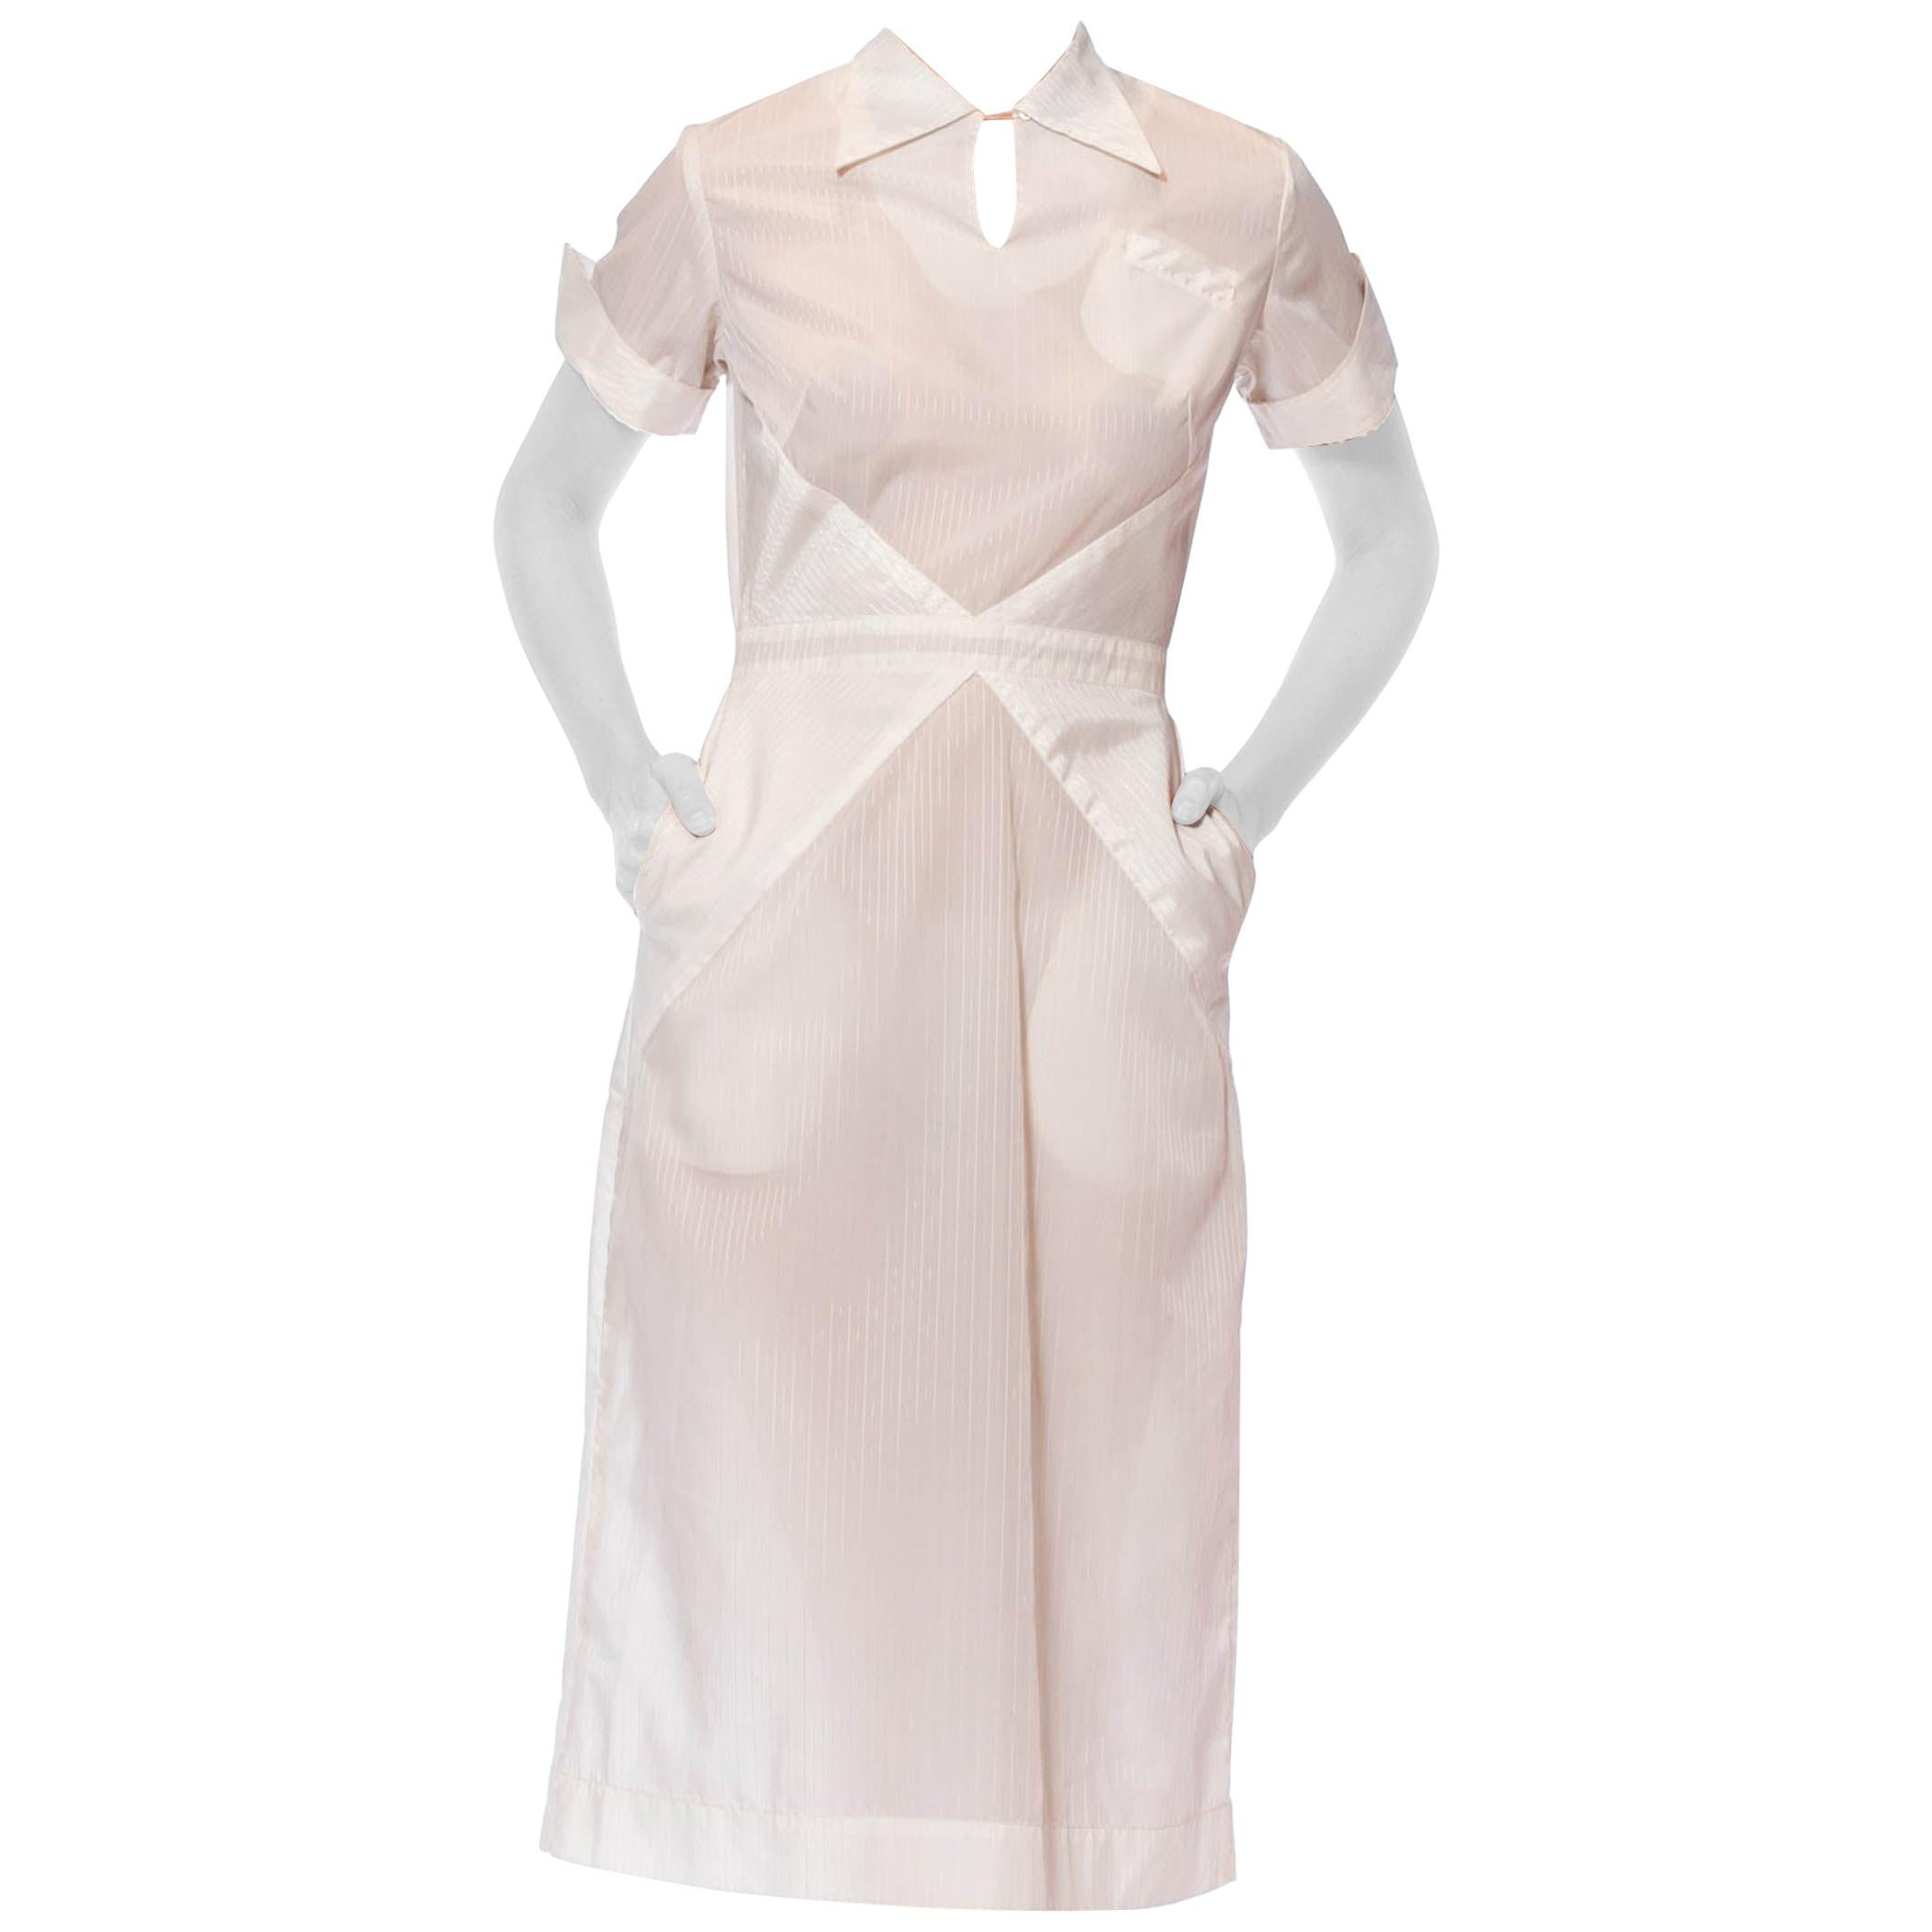 1950S White Nylon Pin-Up Nurse Uniform Dress